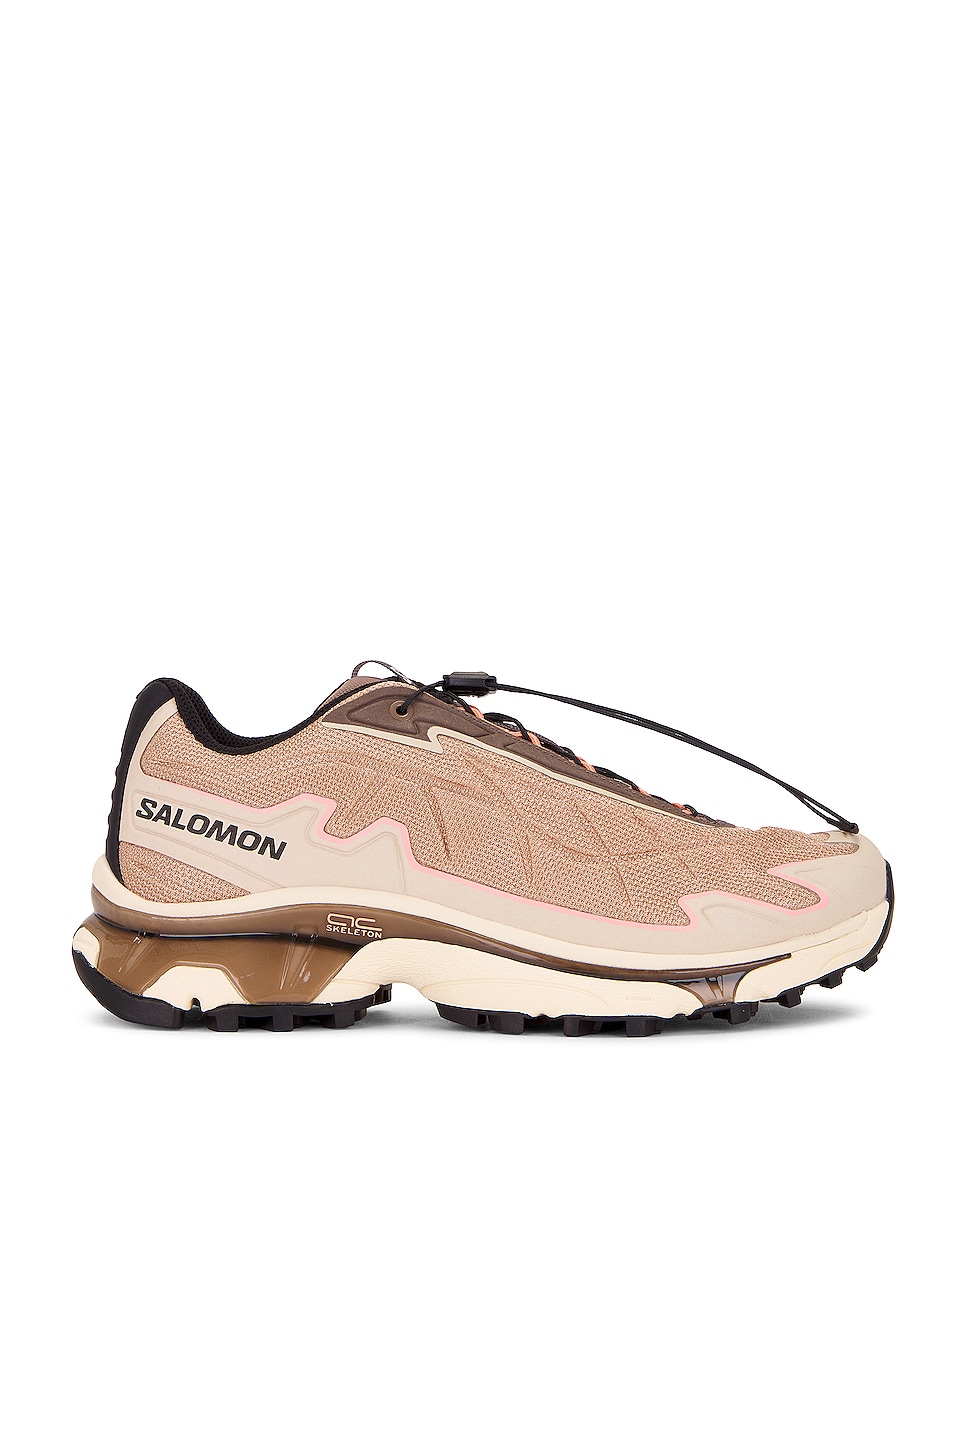 Image 1 of Salomon Xt-Slate Advanced Sneaker in Natural, Cement, & Falcon